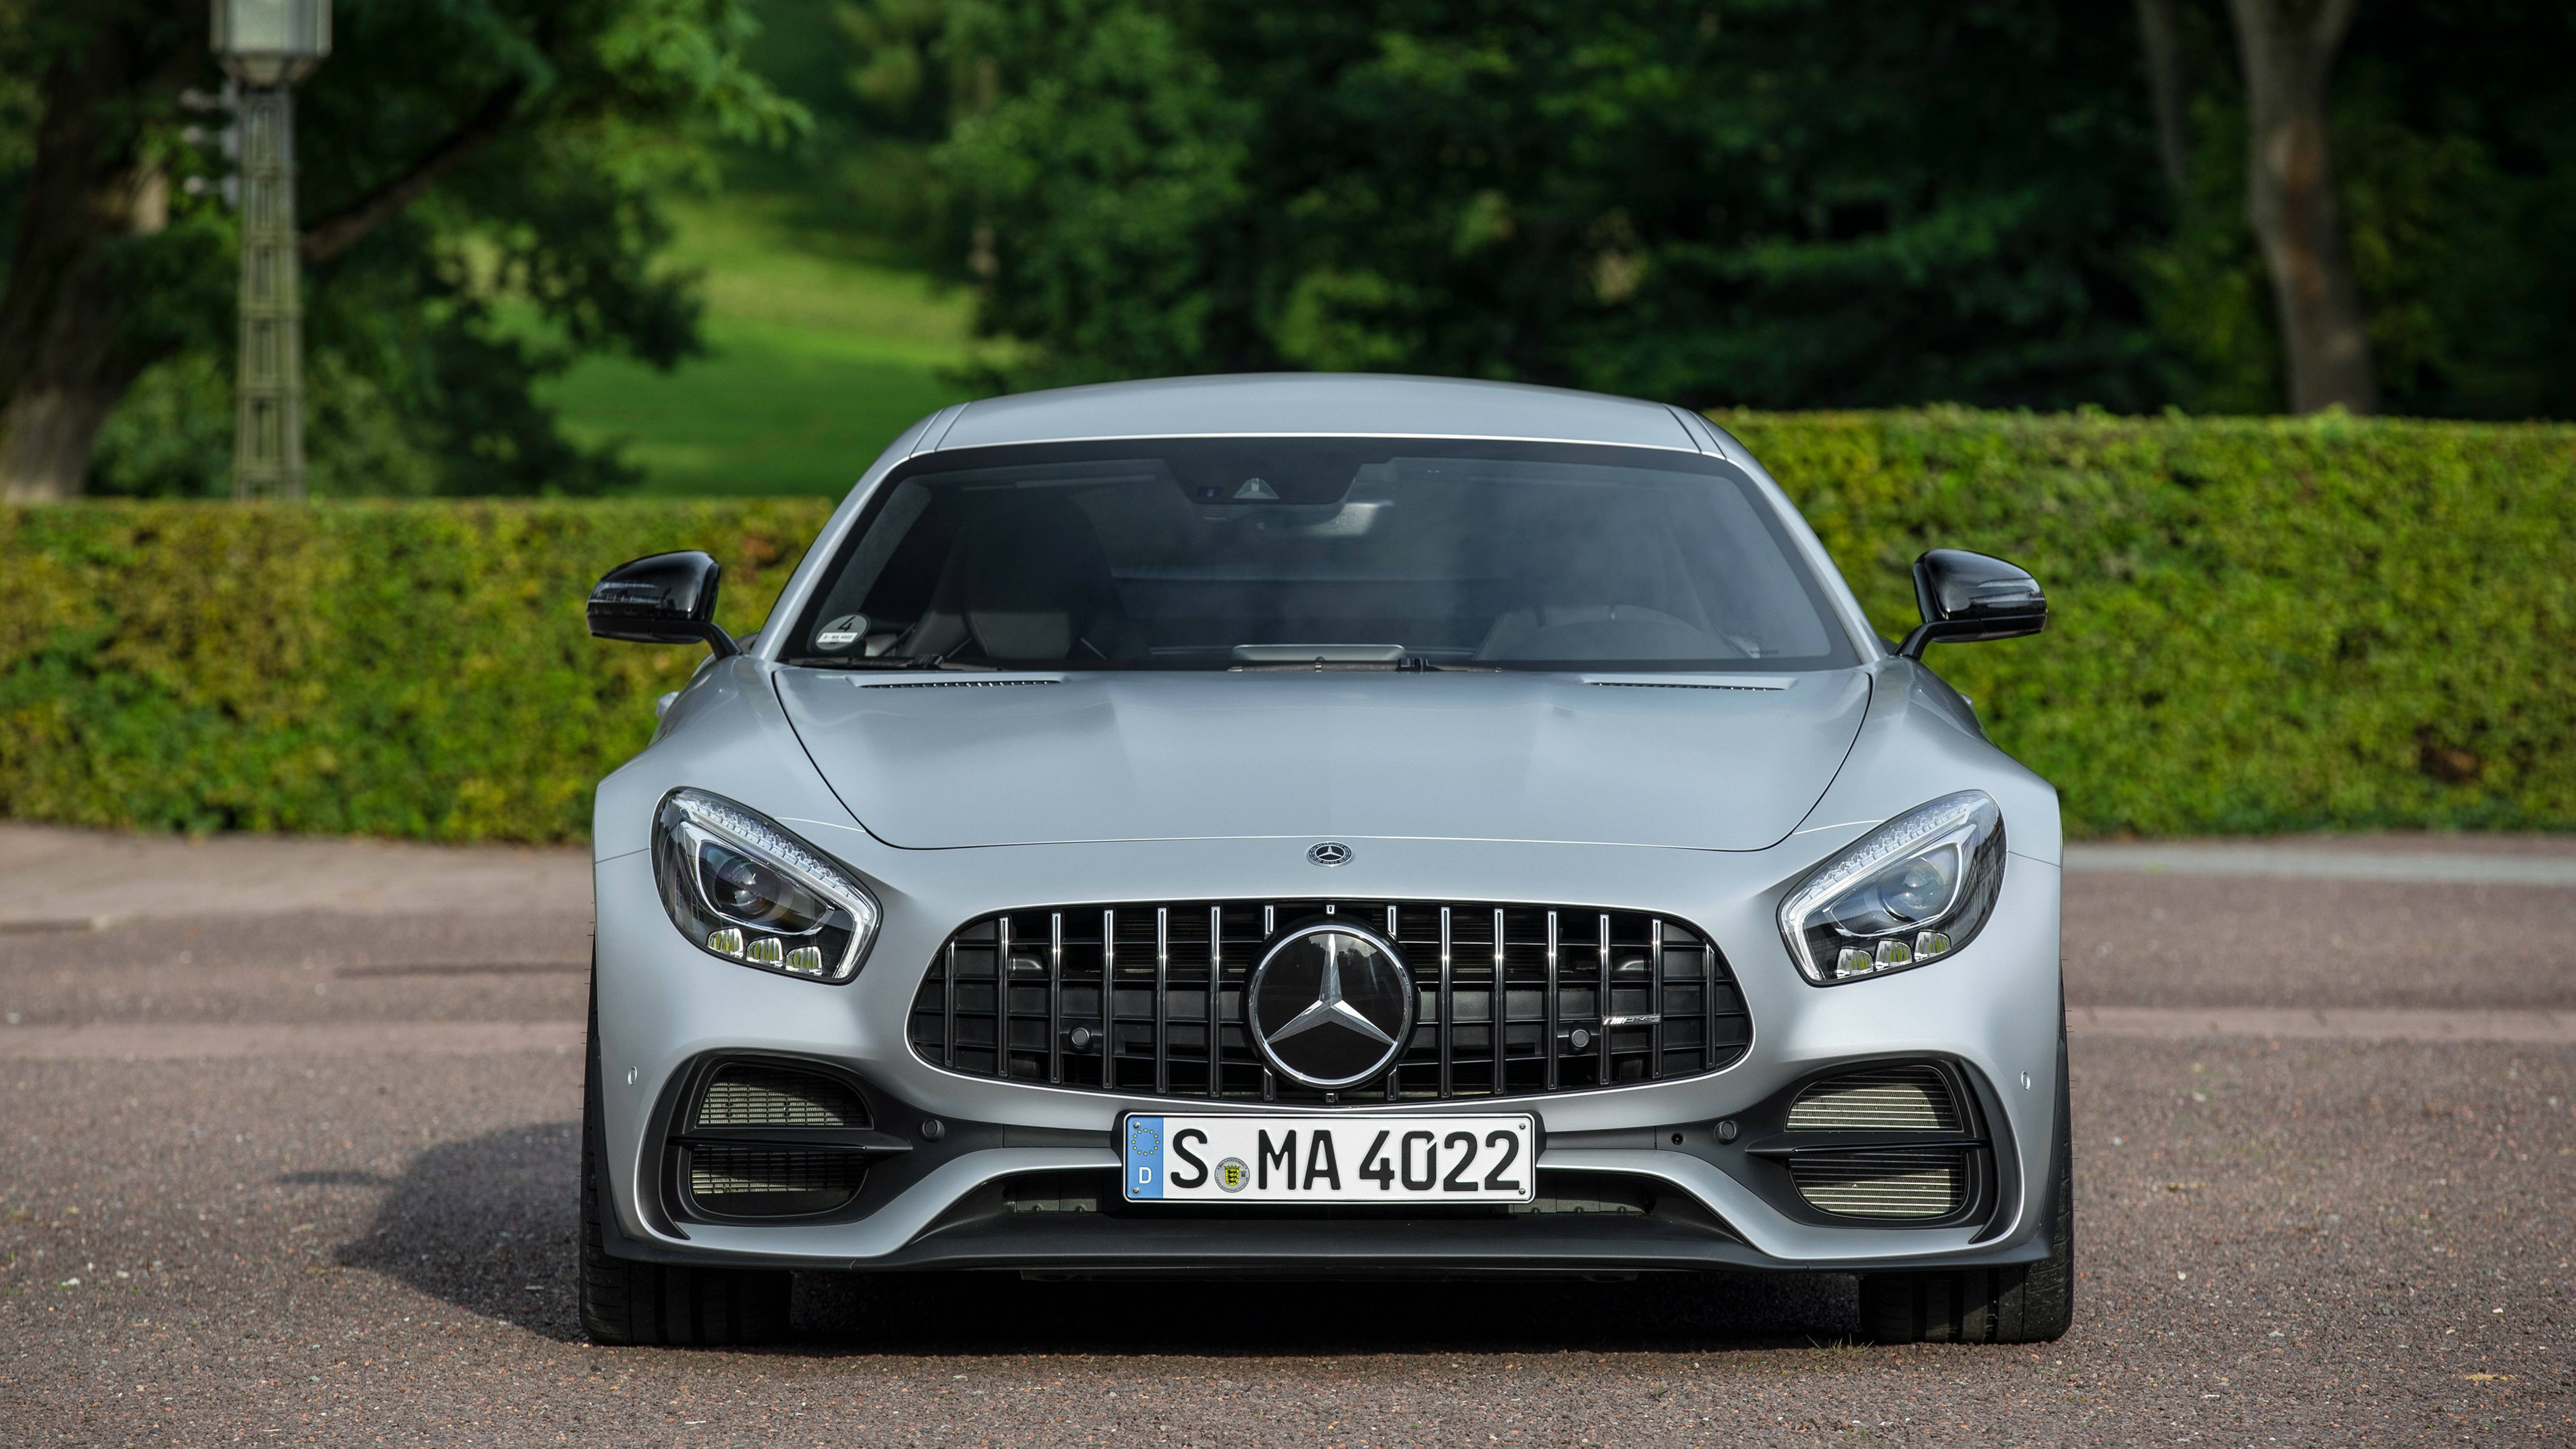 Caption: Exquisite Mercedes-amg: Power Meets Luxury In 4k